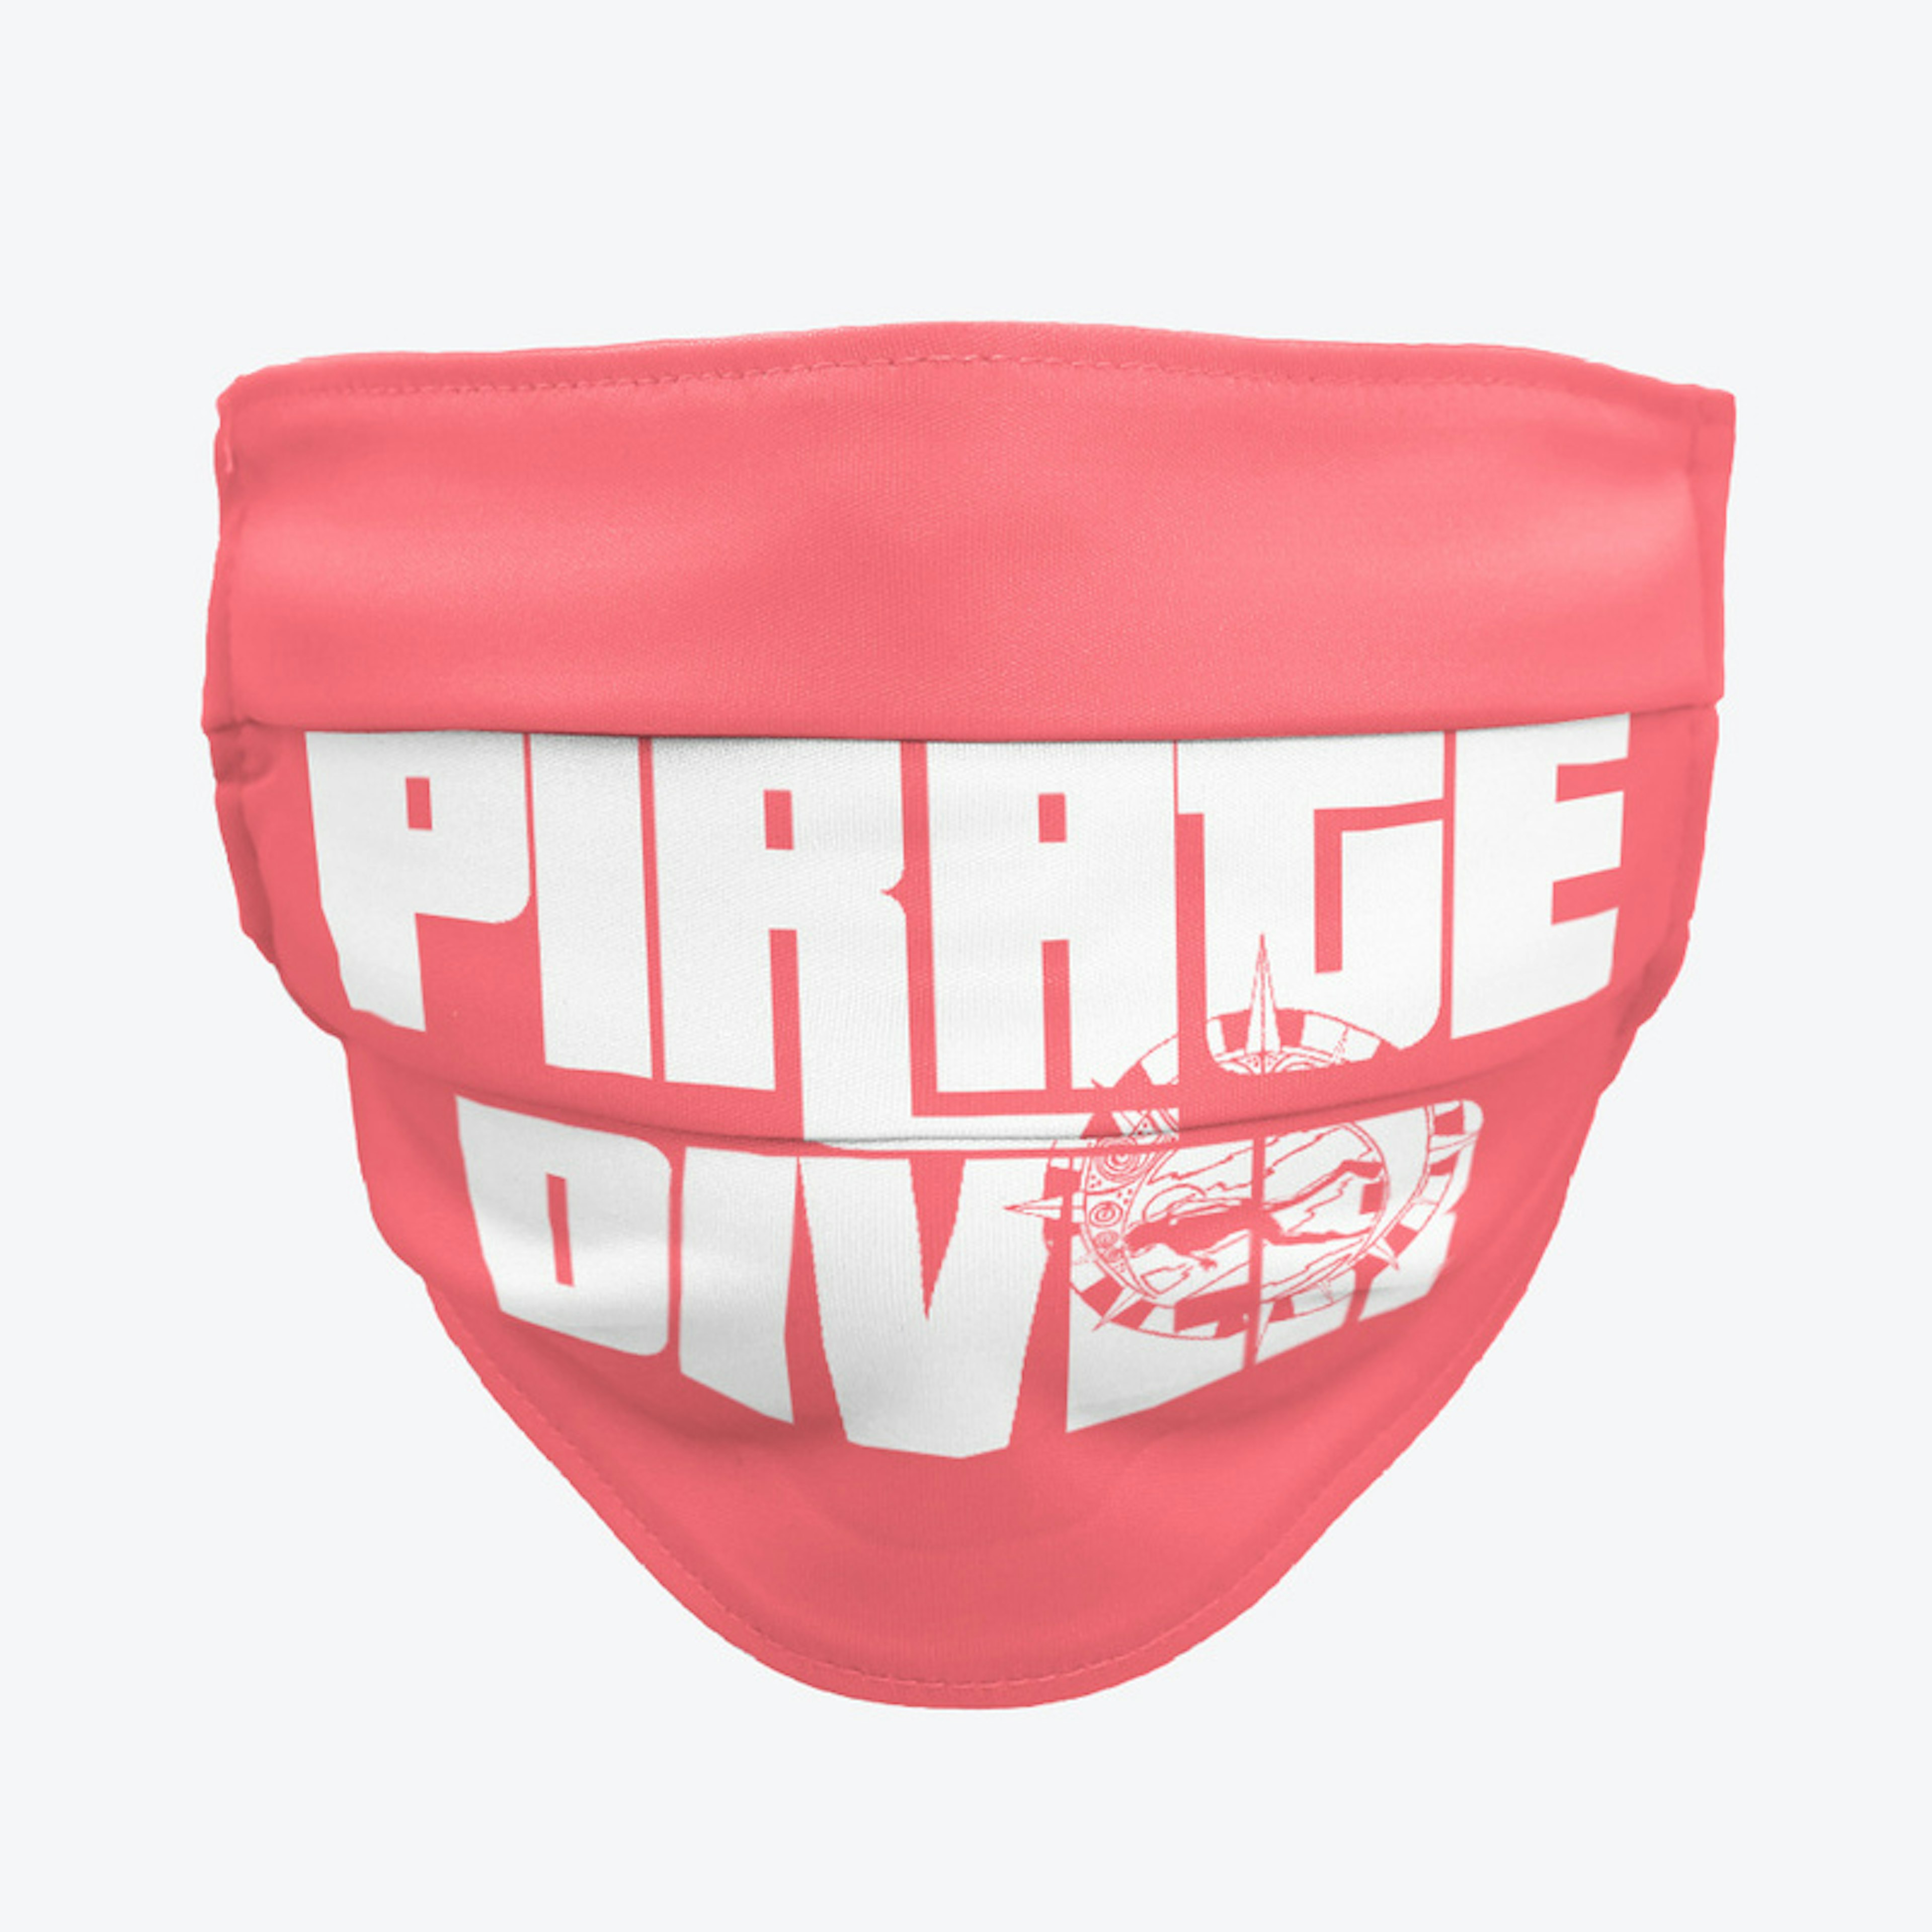 Pirate Diver